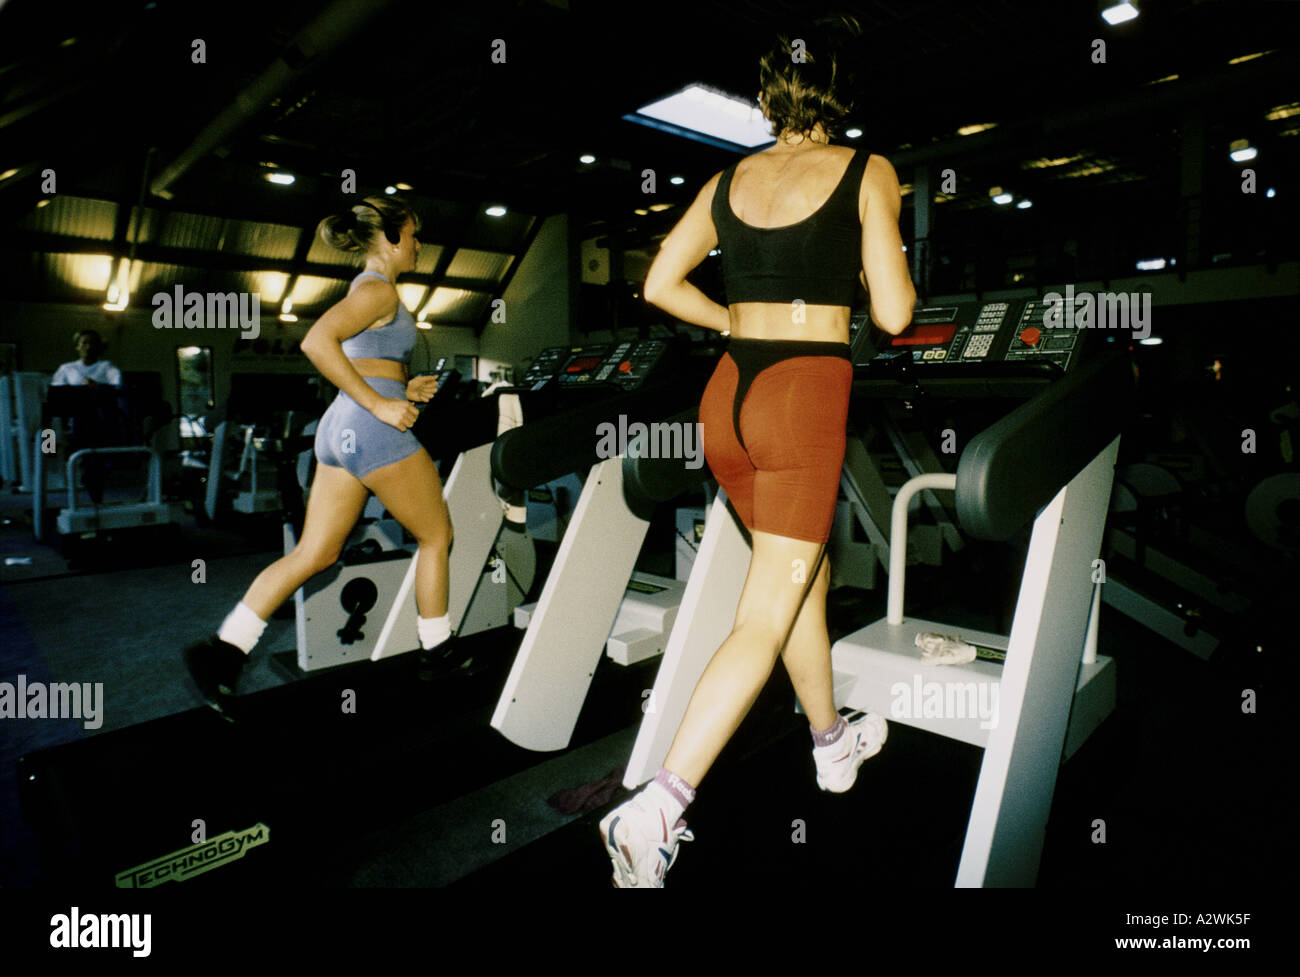 Treadmill thong